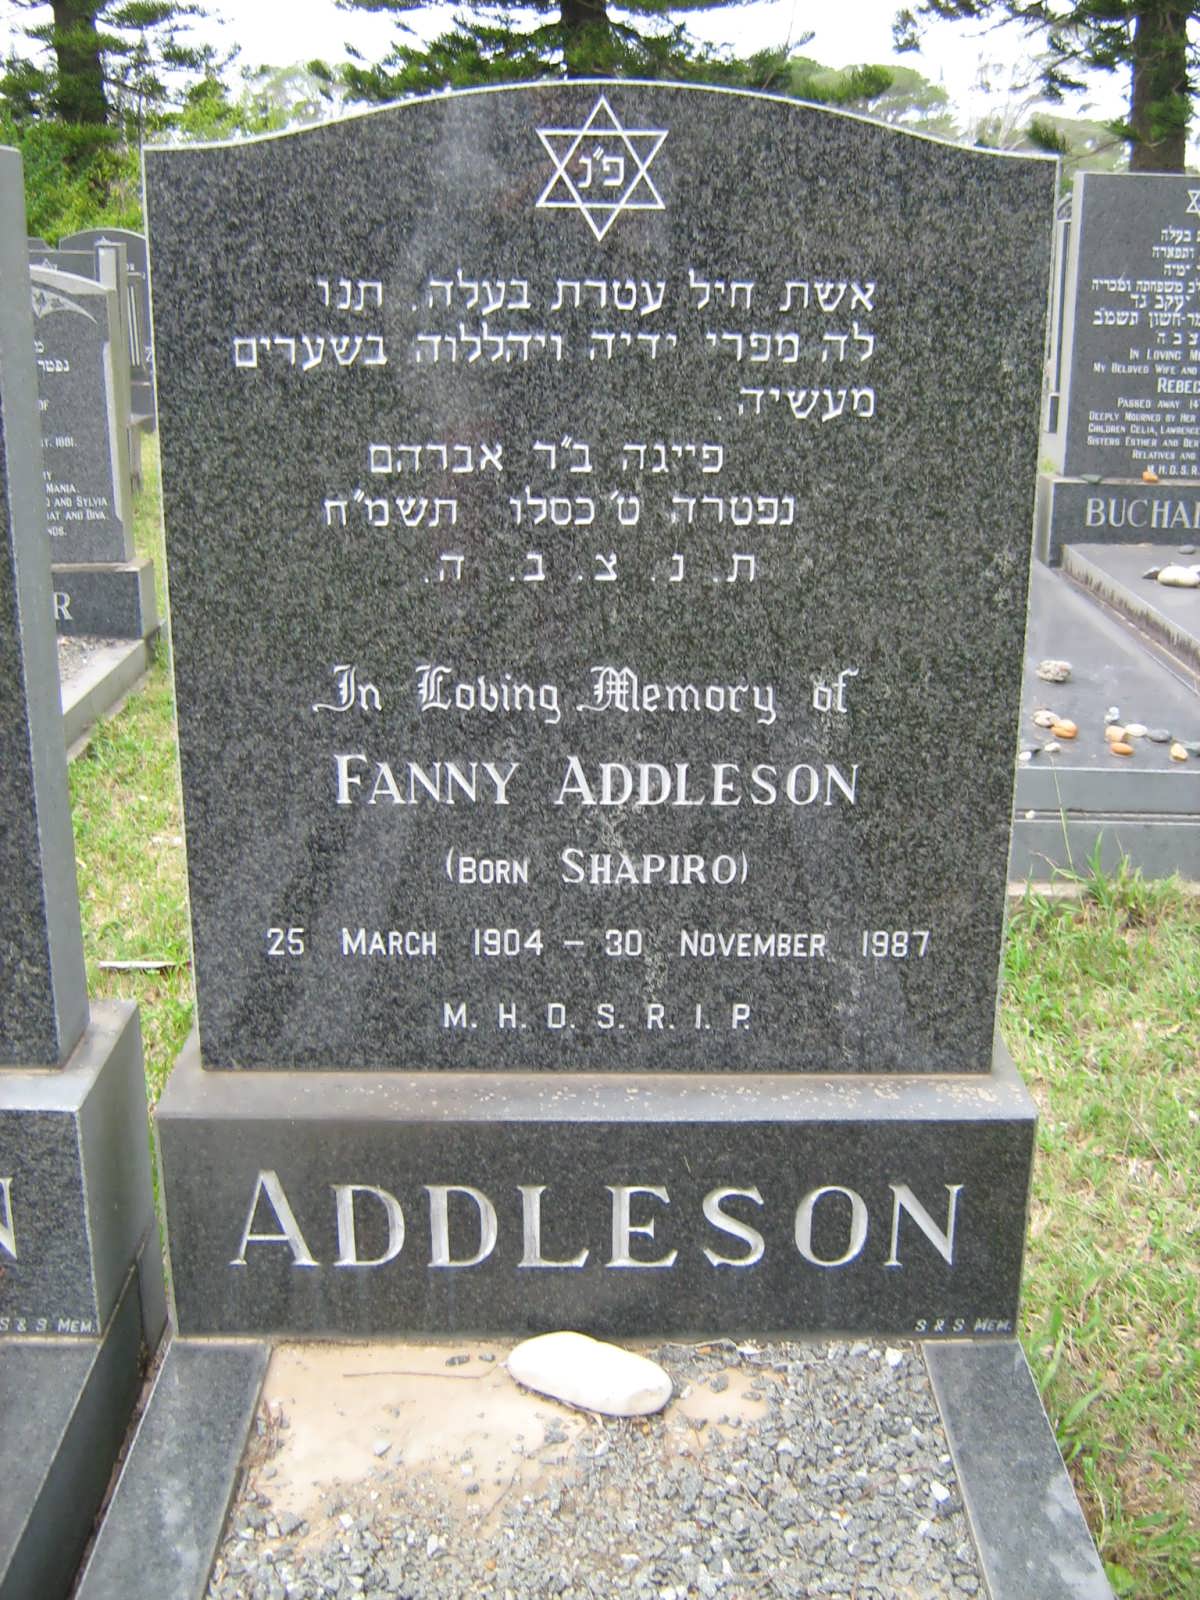 ADDLESON Fanny born SHAPIRO 1904-1987